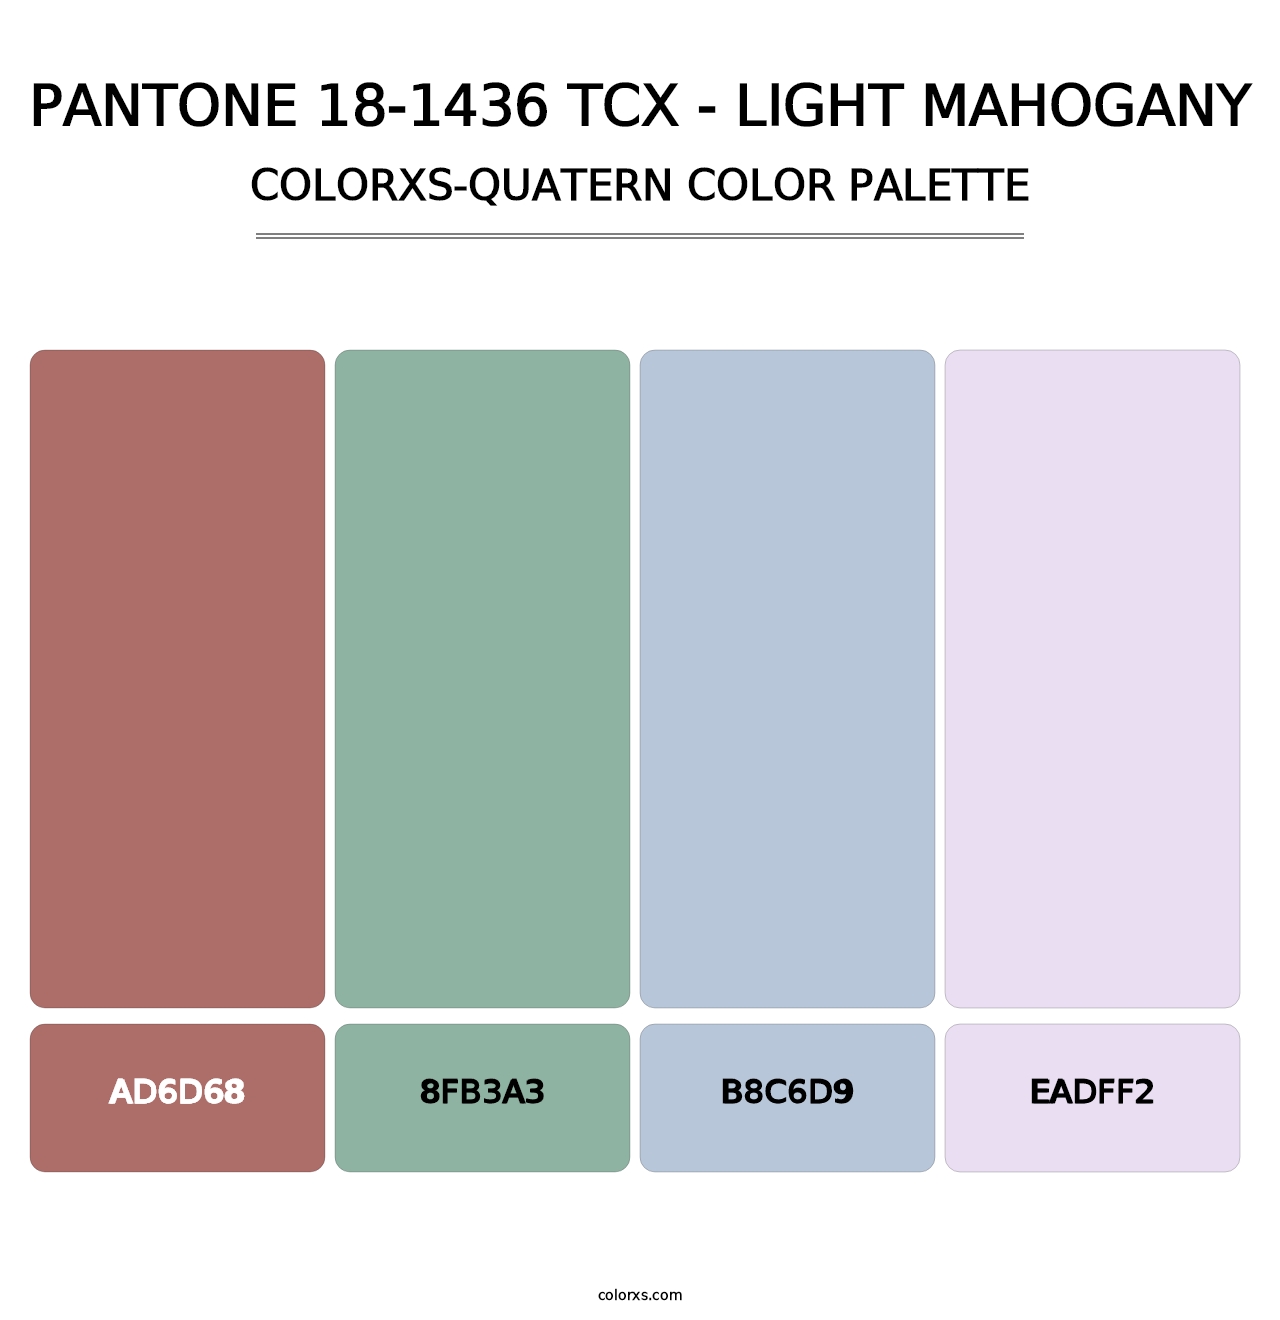 PANTONE 18-1436 TCX - Light Mahogany - Colorxs Quatern Palette